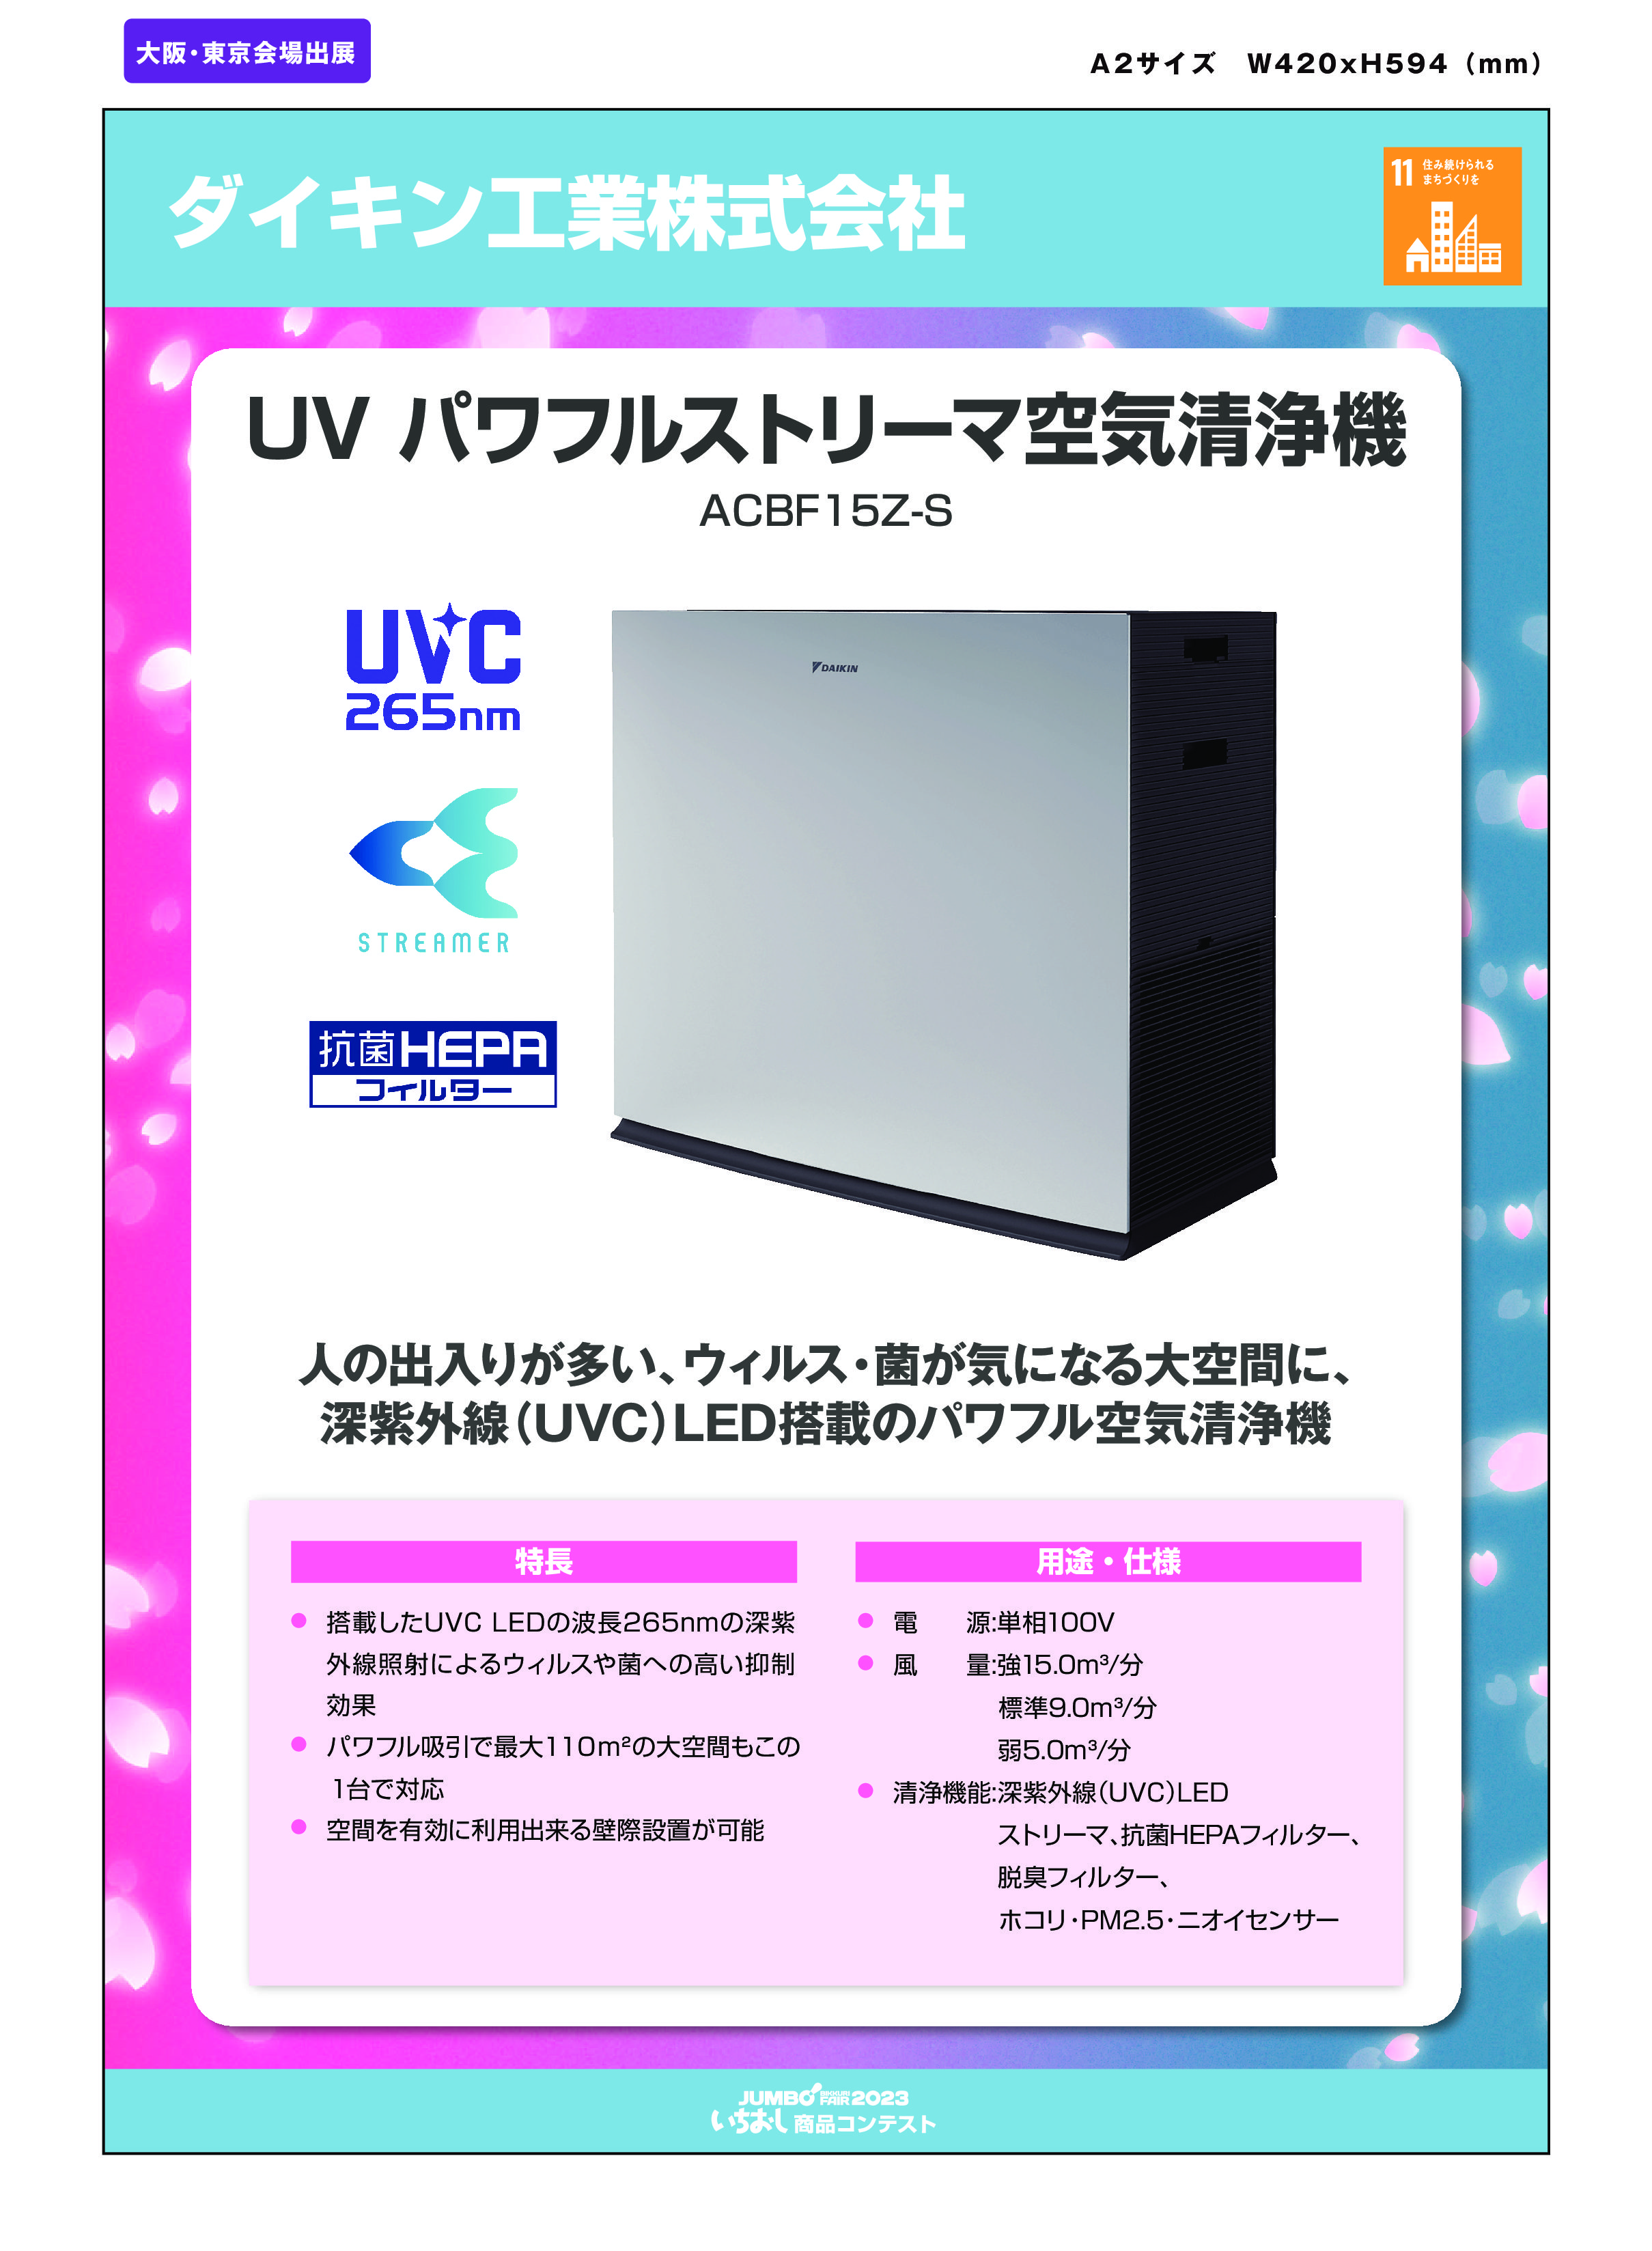 「UV パワフルストリーマ空気清浄機」ダイキン工業株式会社の画像